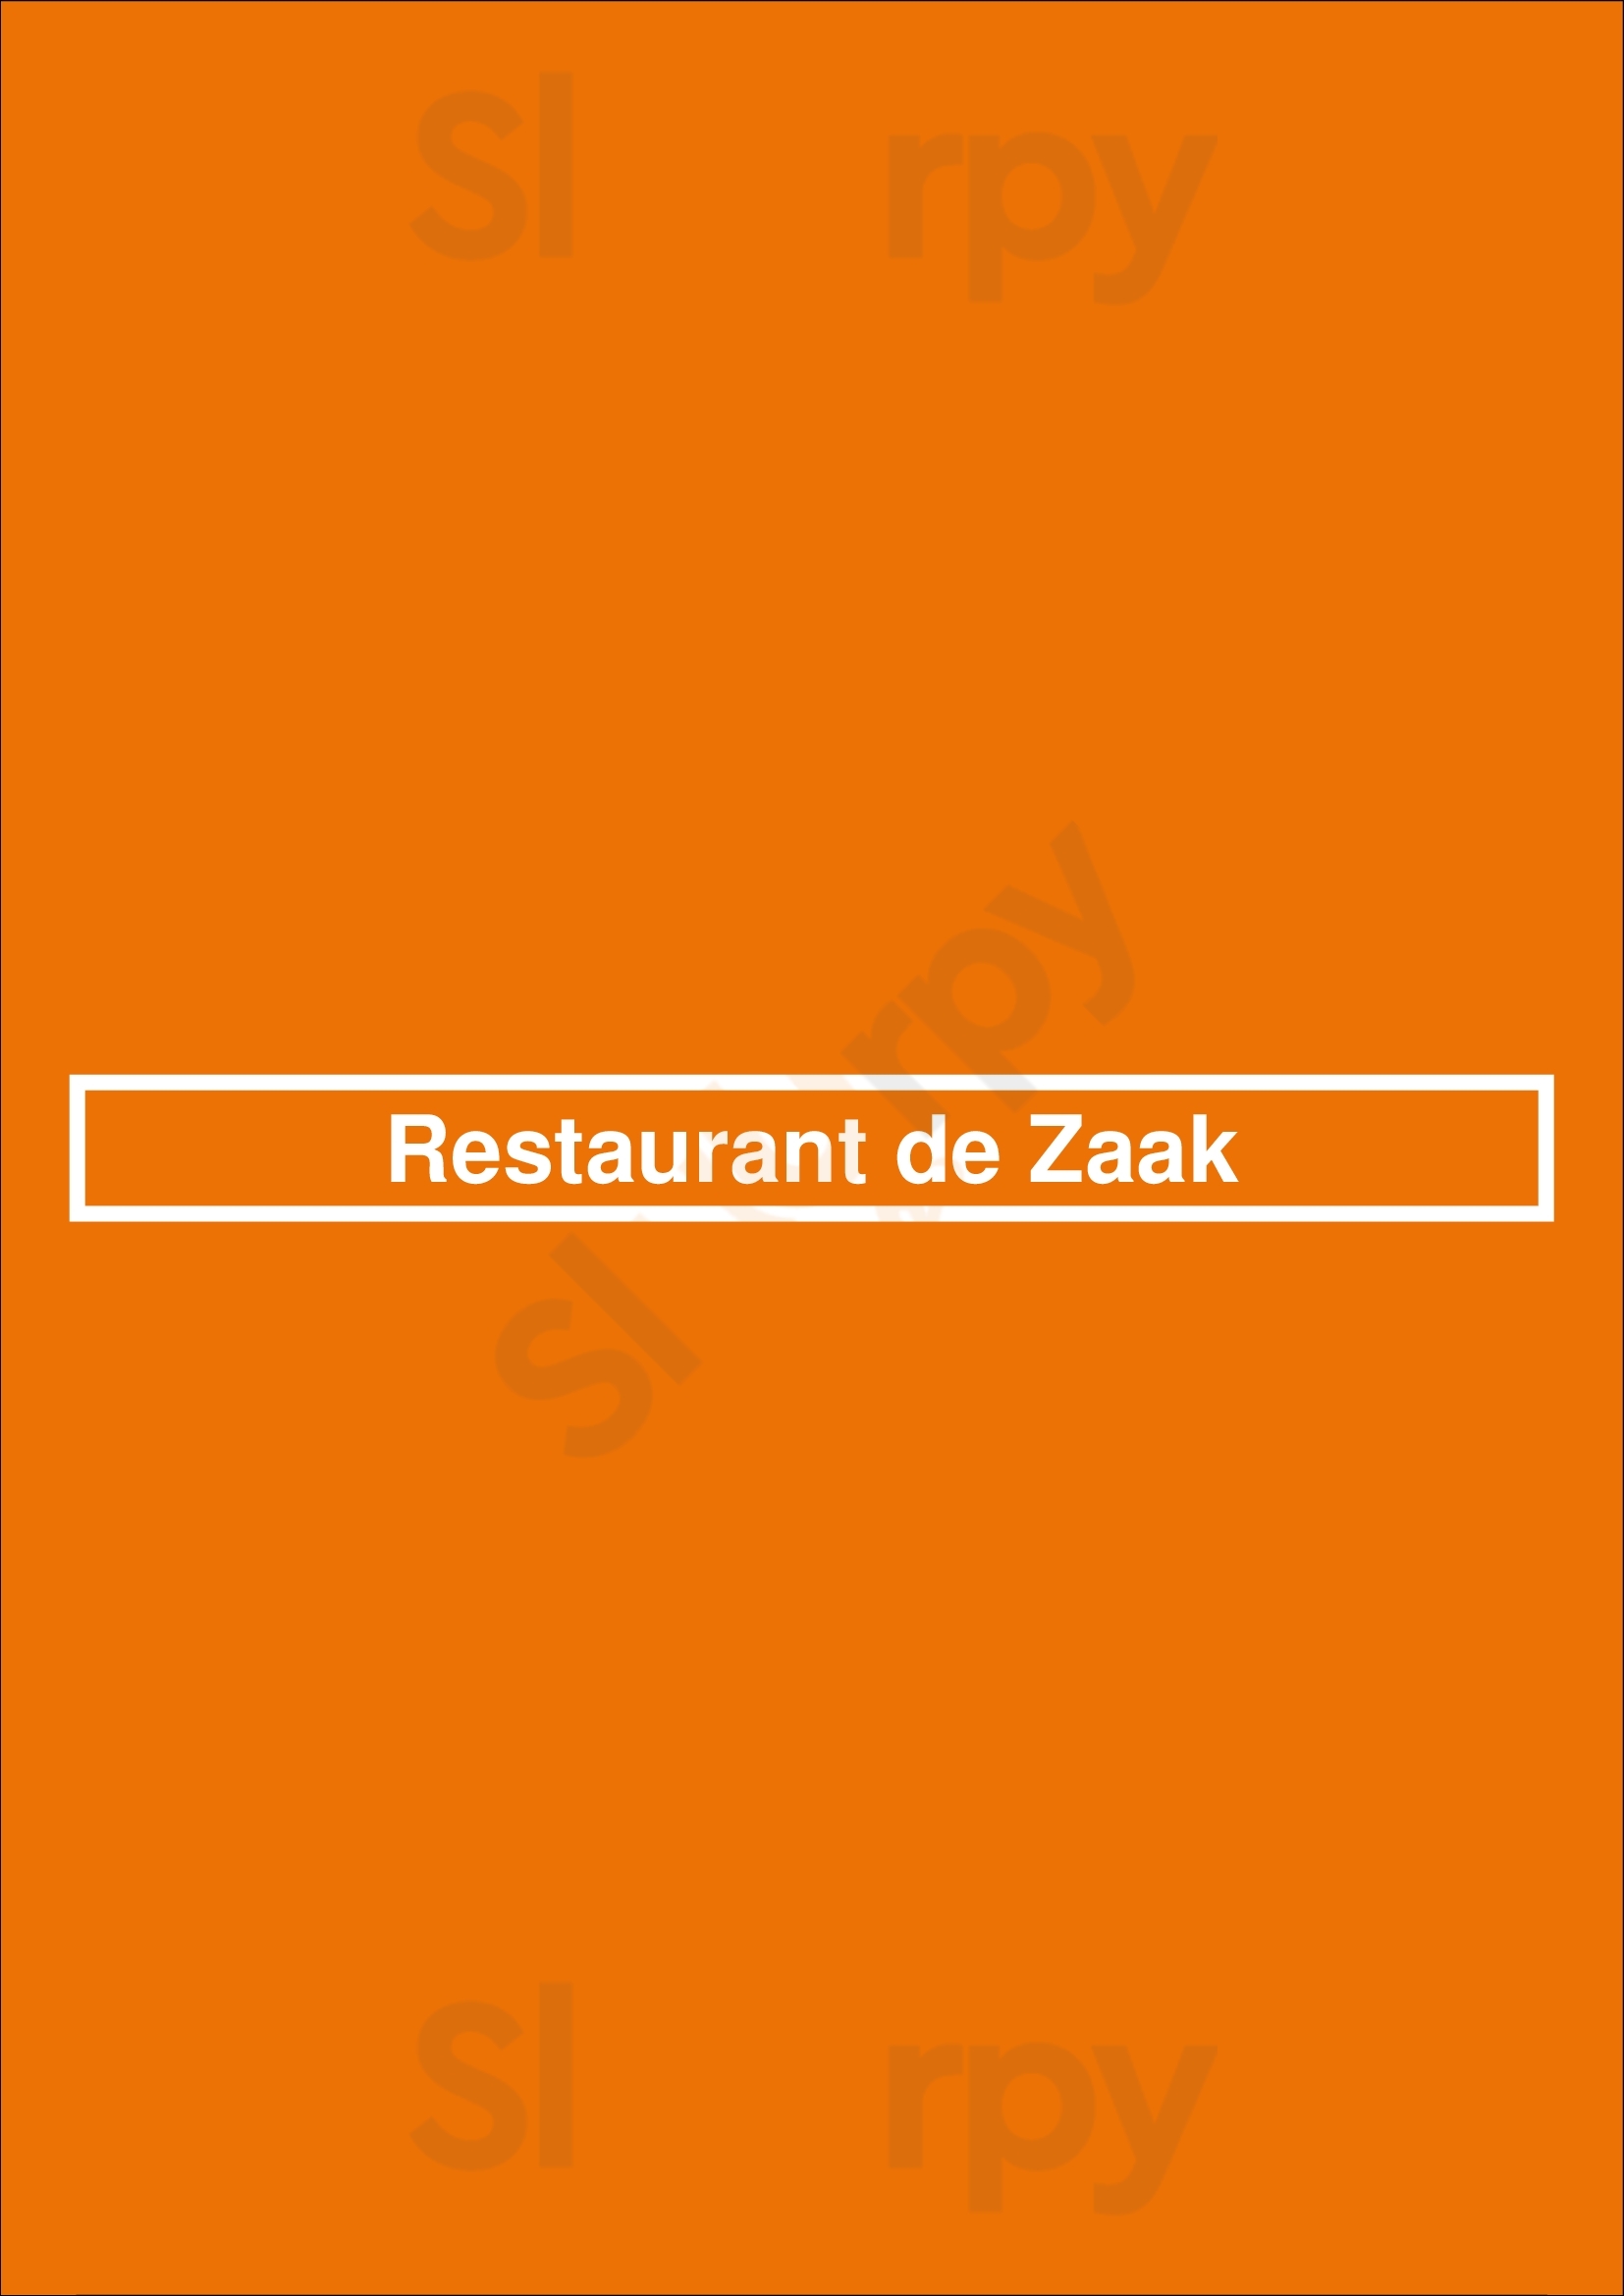 Restaurant De Zaak Doetinchem Menu - 1